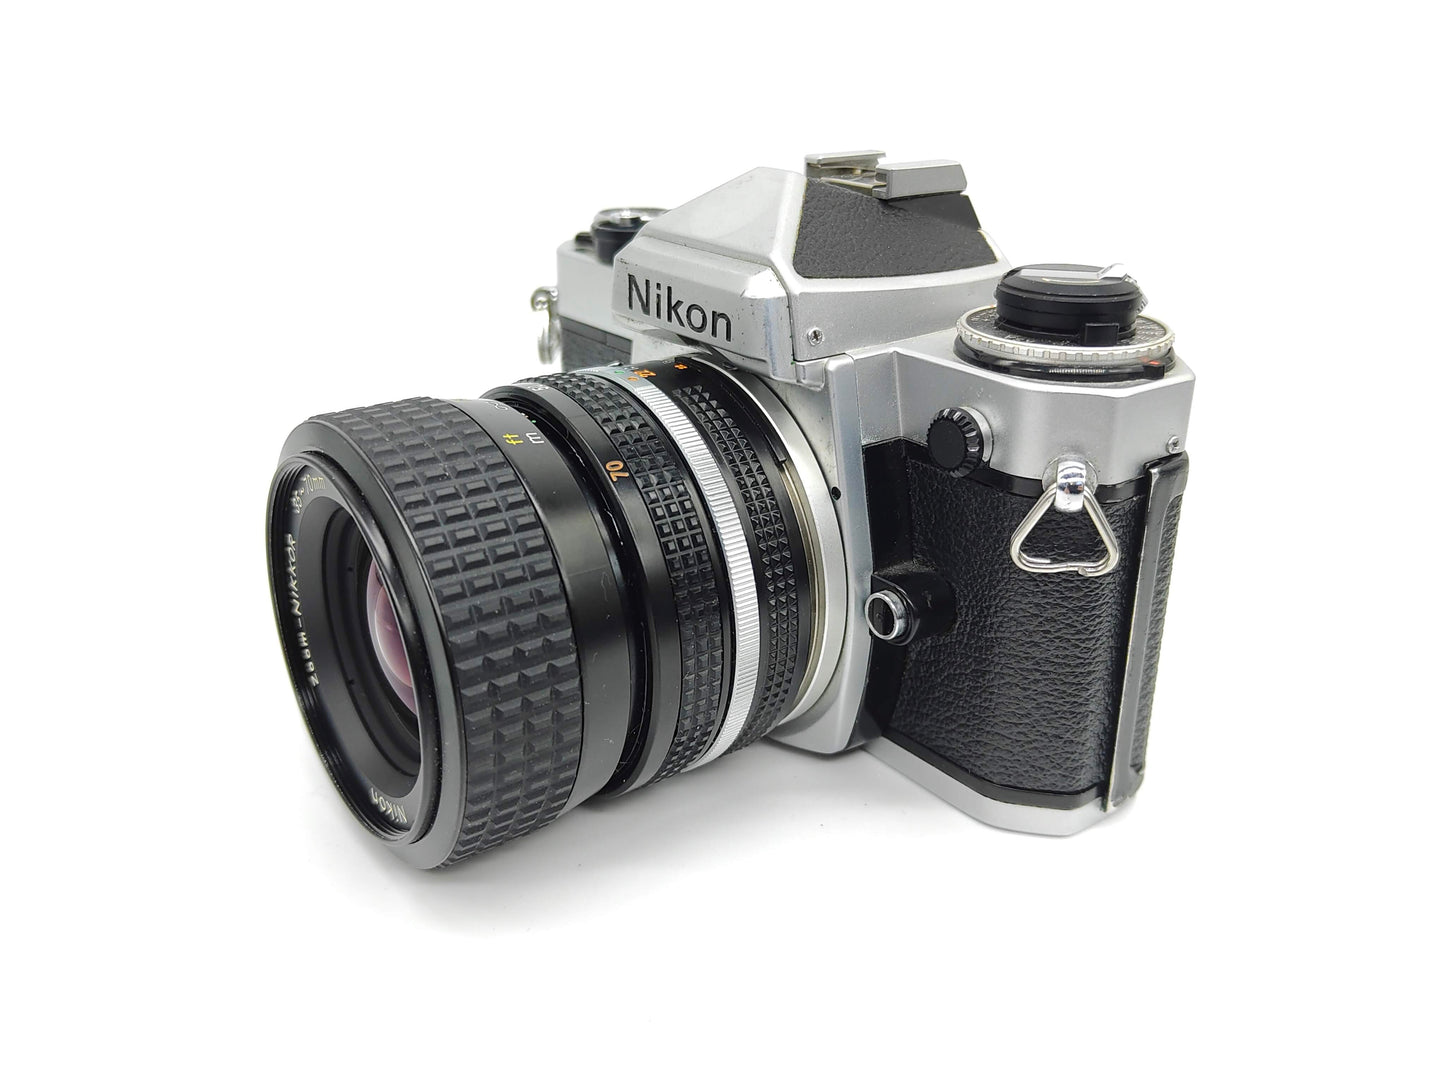 Nikon FE SLR (silver) film camera